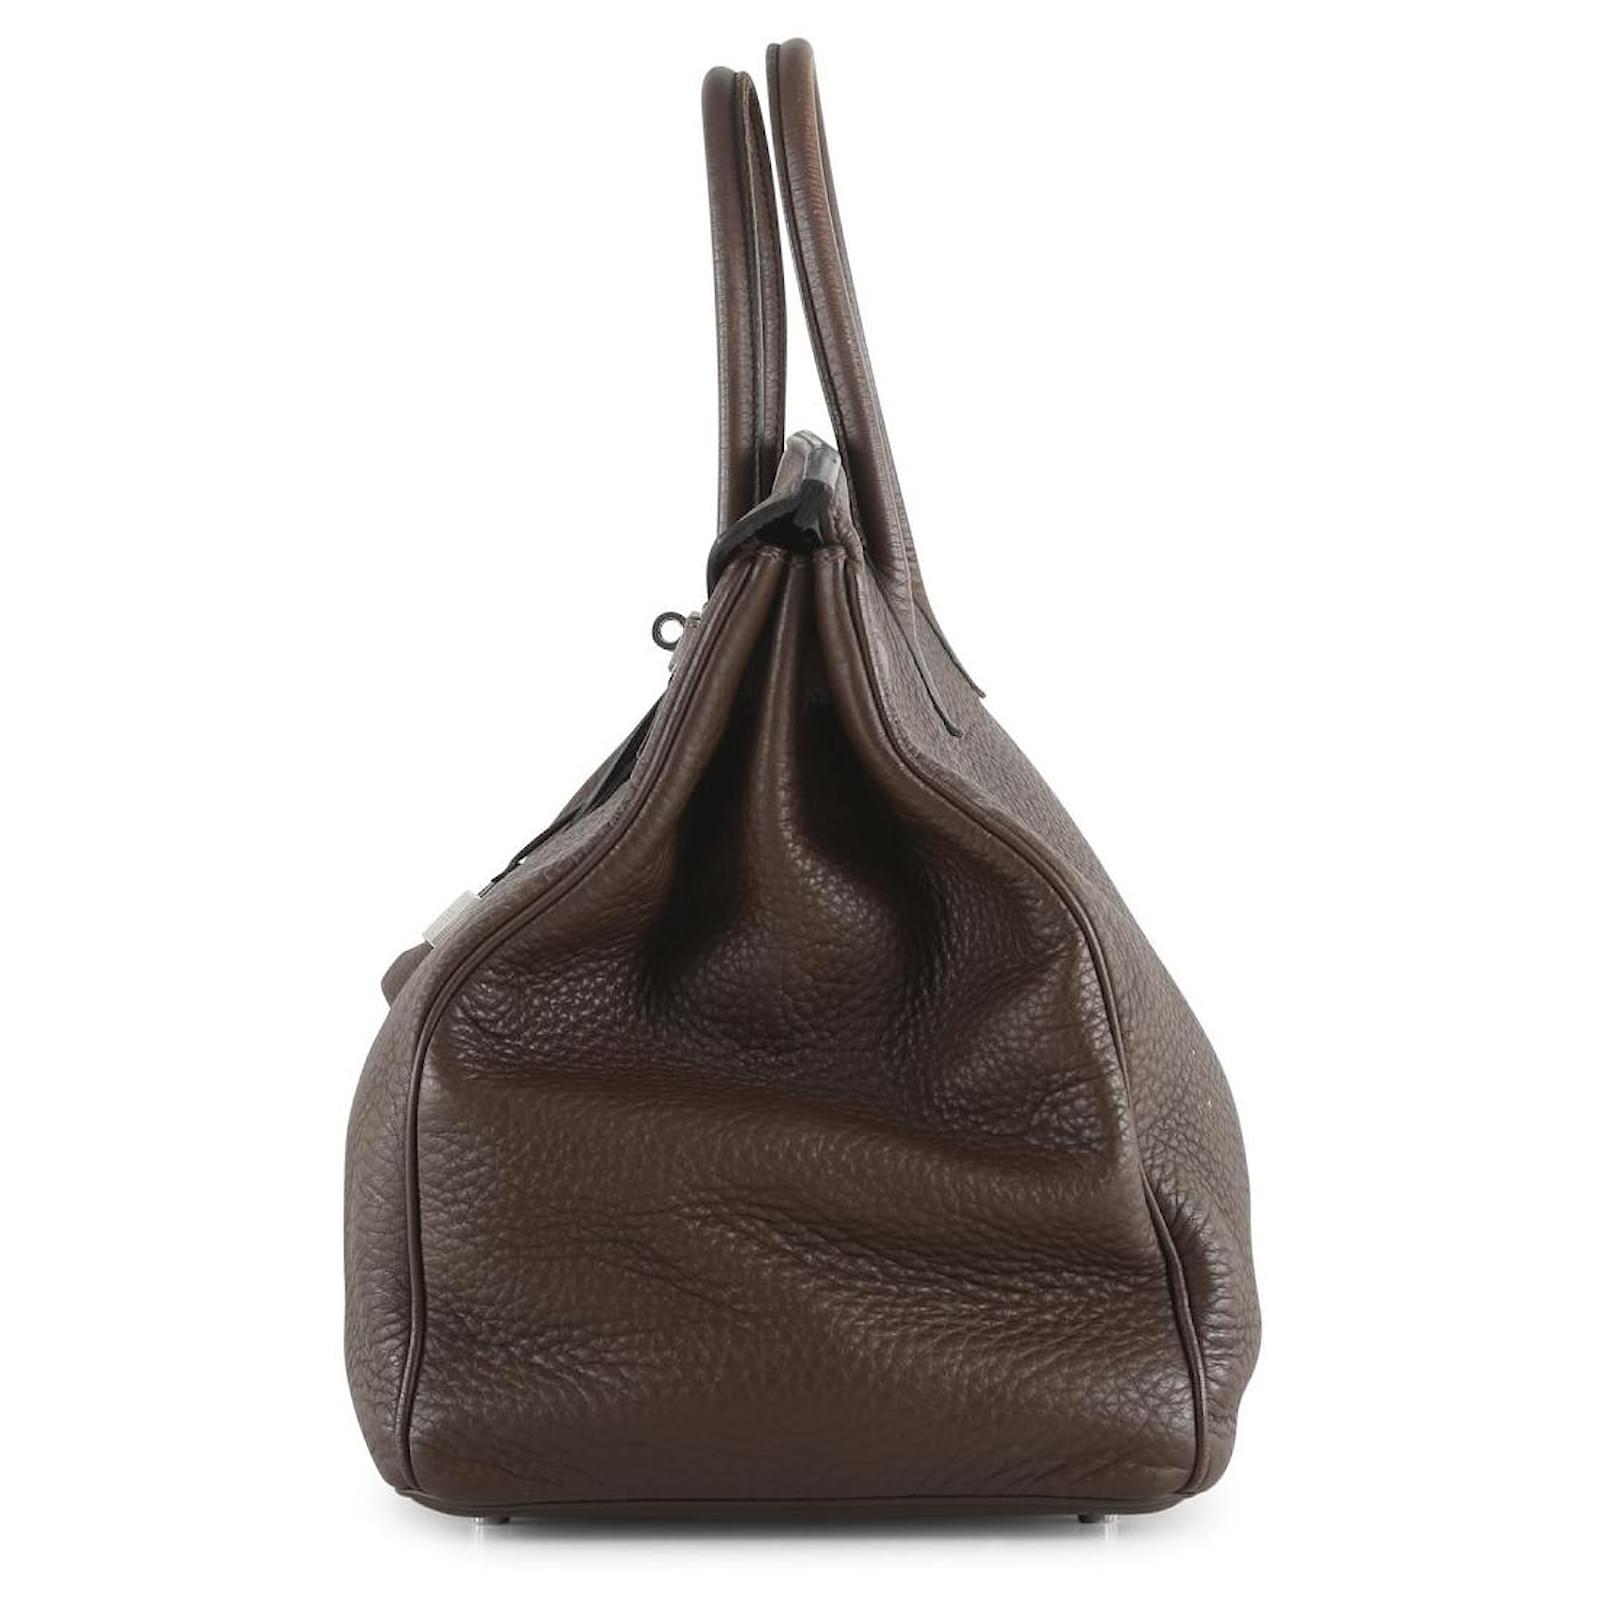 Hermes 35cm Chocolate Togo Leather Palladium Hardware Birkin Bag